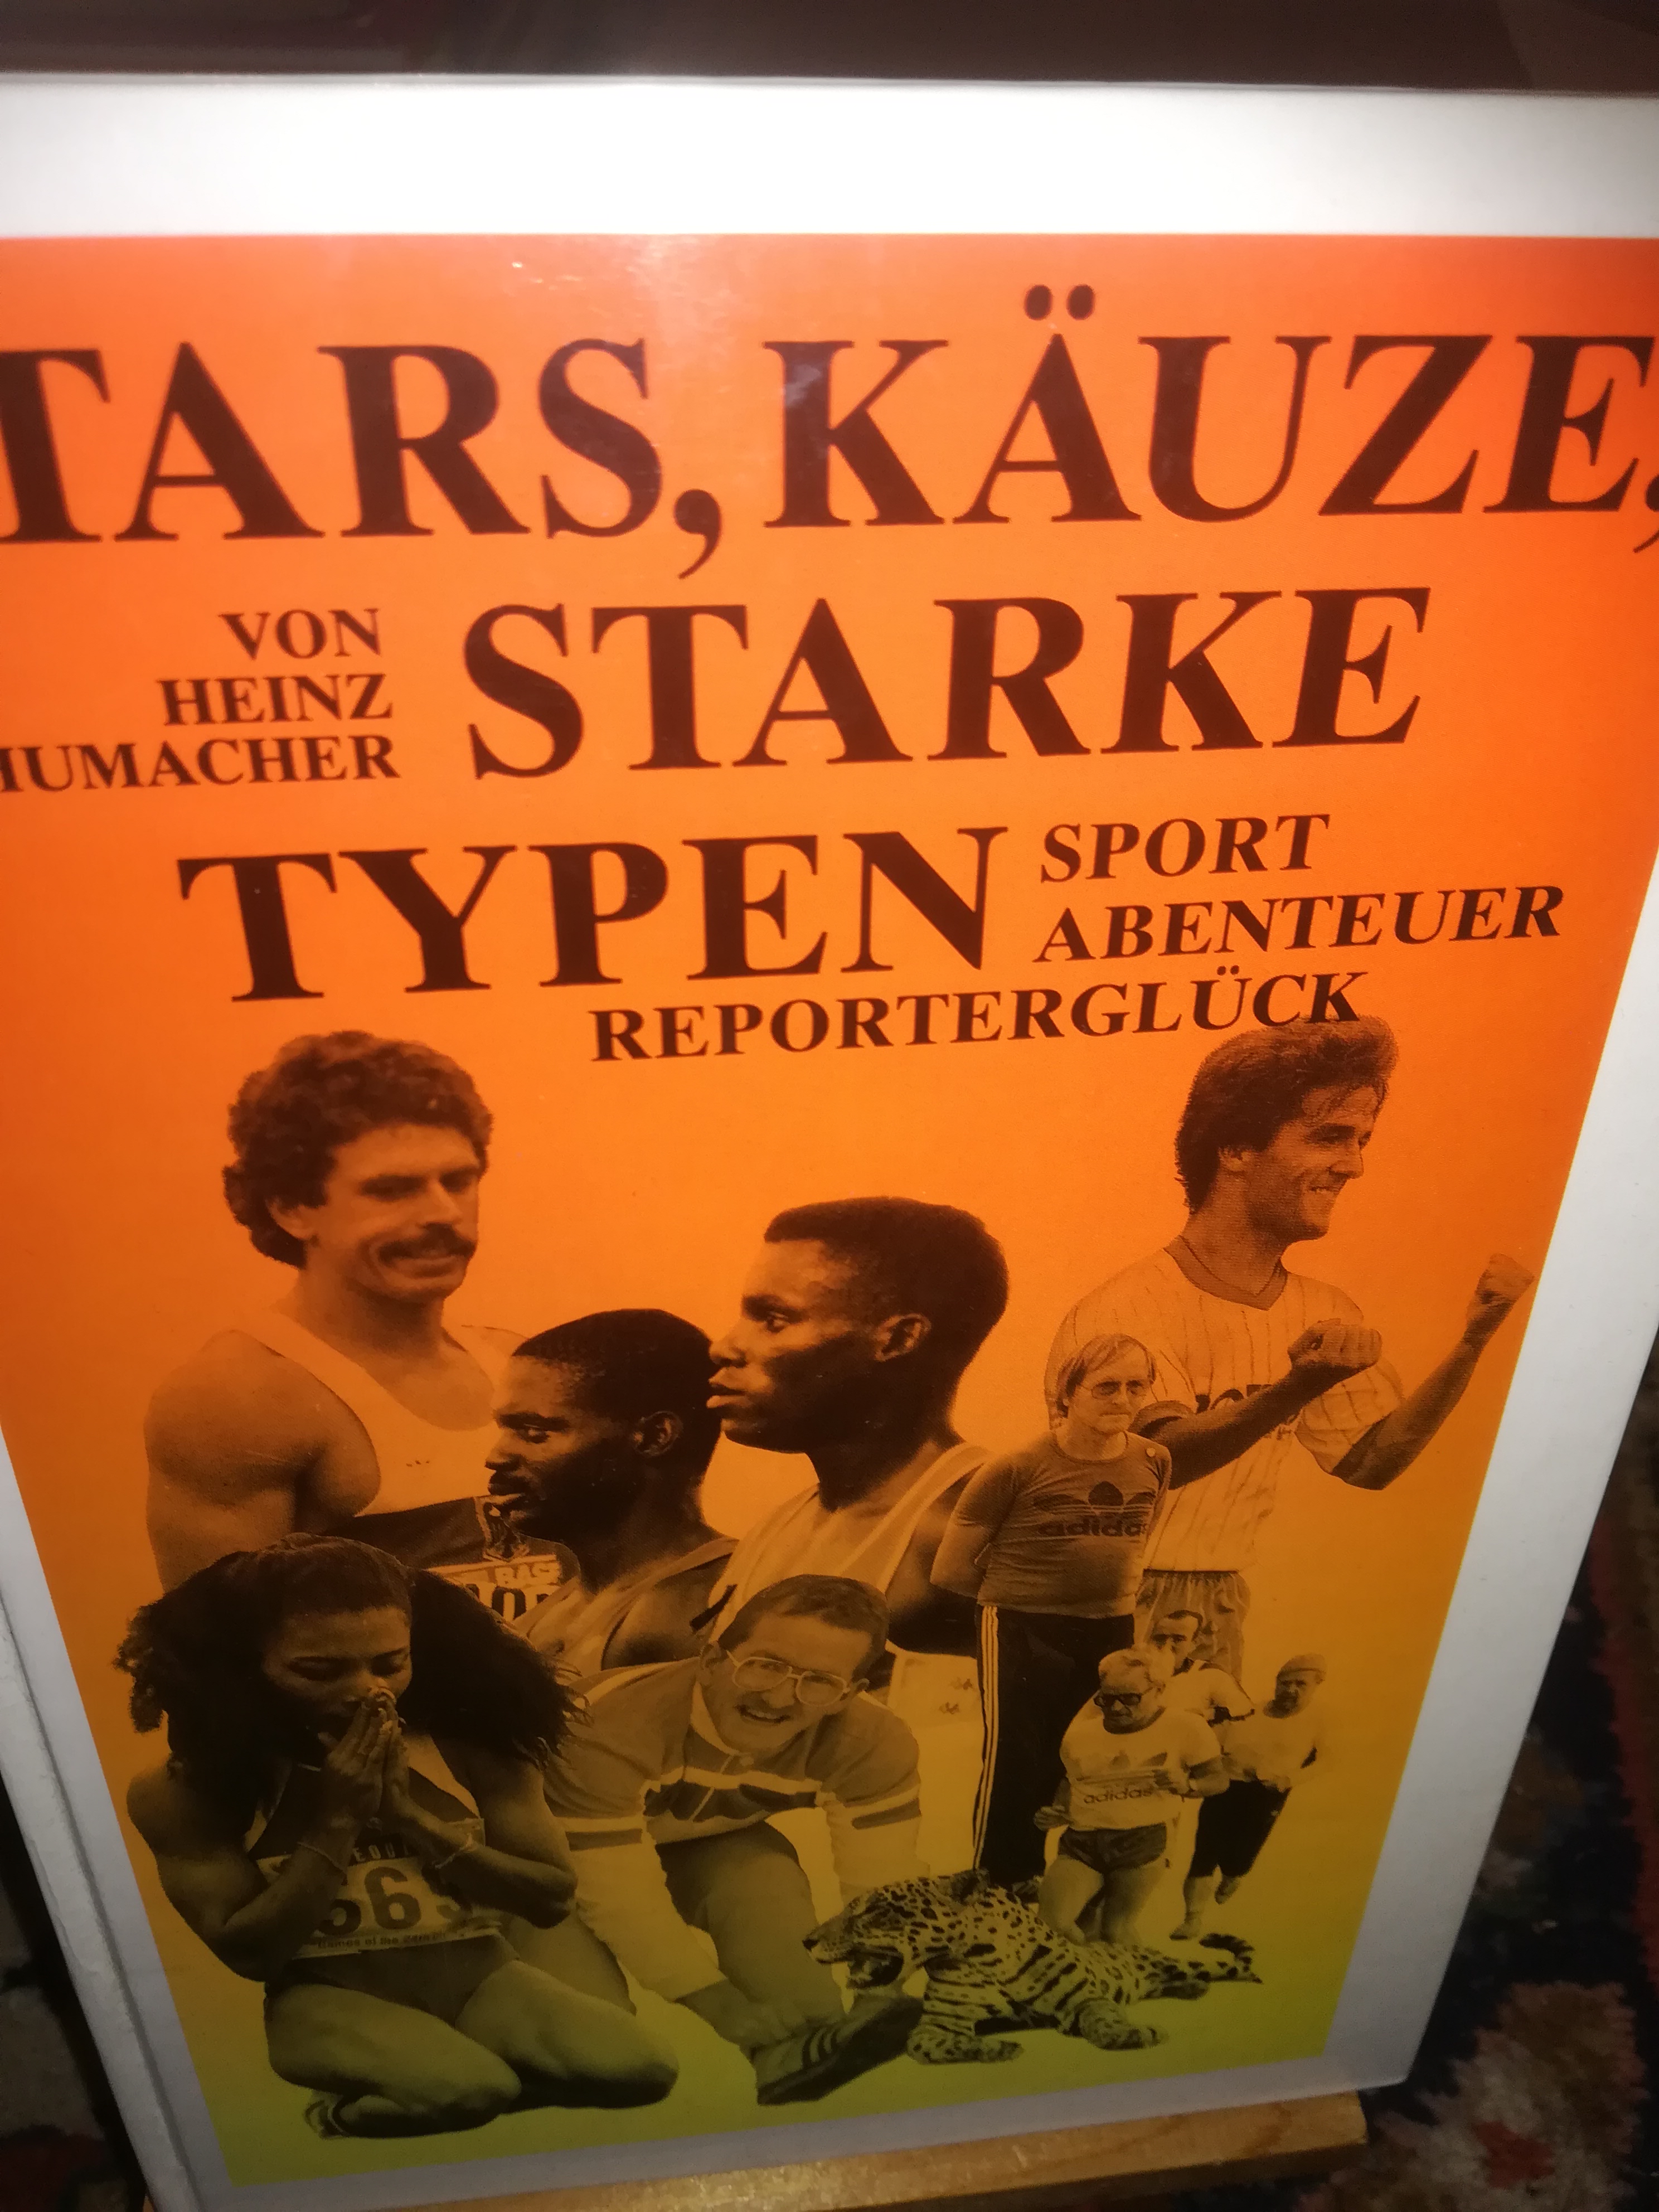 Stars, Käuze, starke Typen, Sport, Abenteuer, Reporterglück - Schumacher Heinz